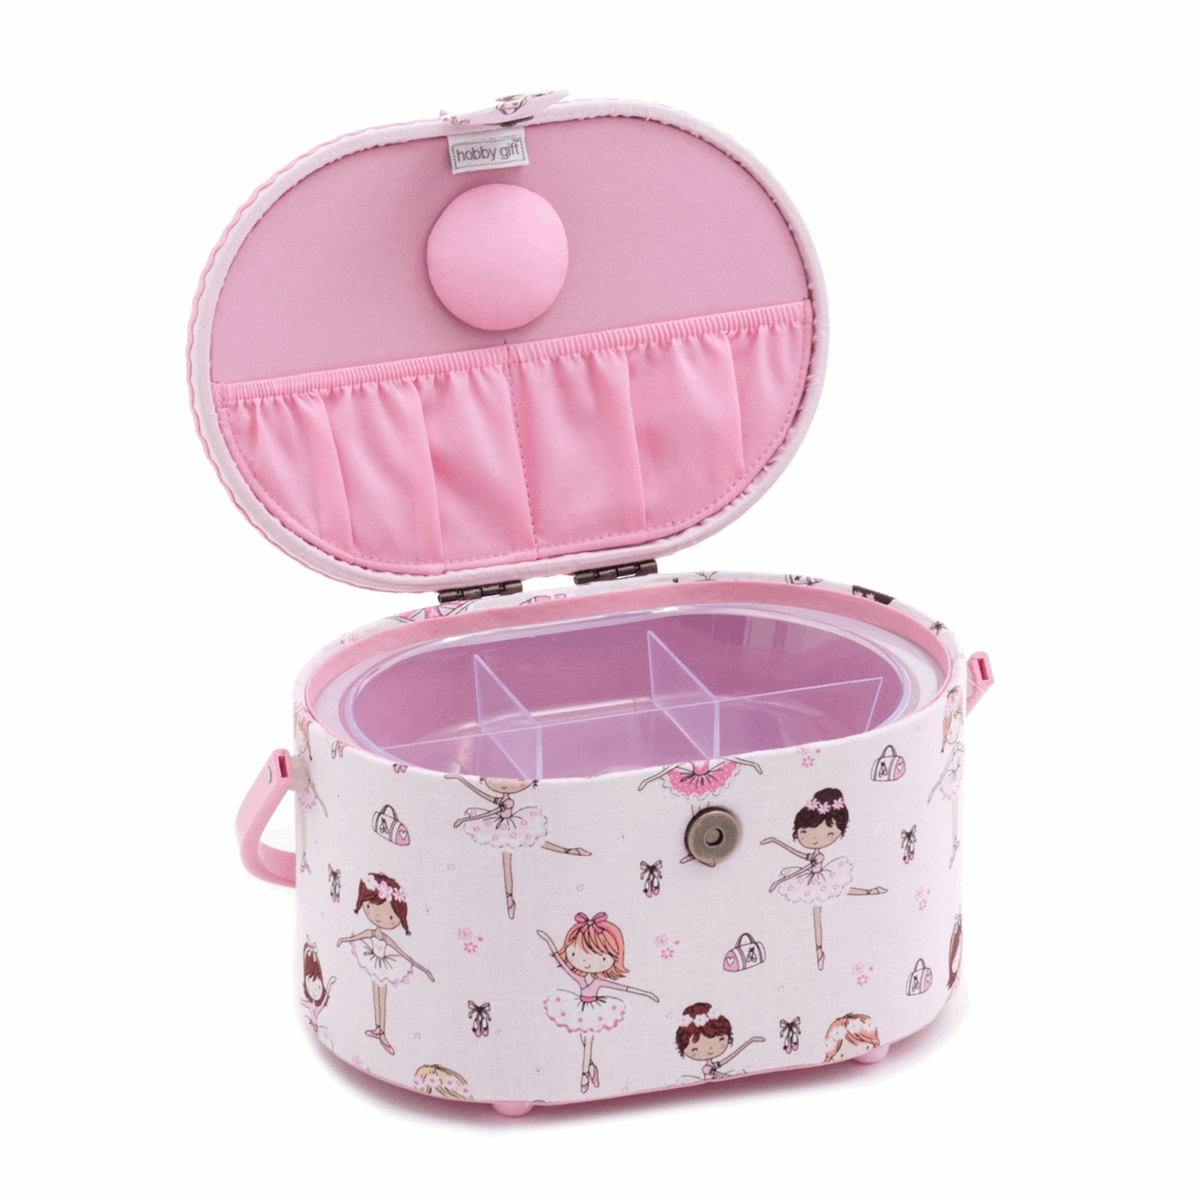 Ballerina Applique Sewing Box - Small Oval